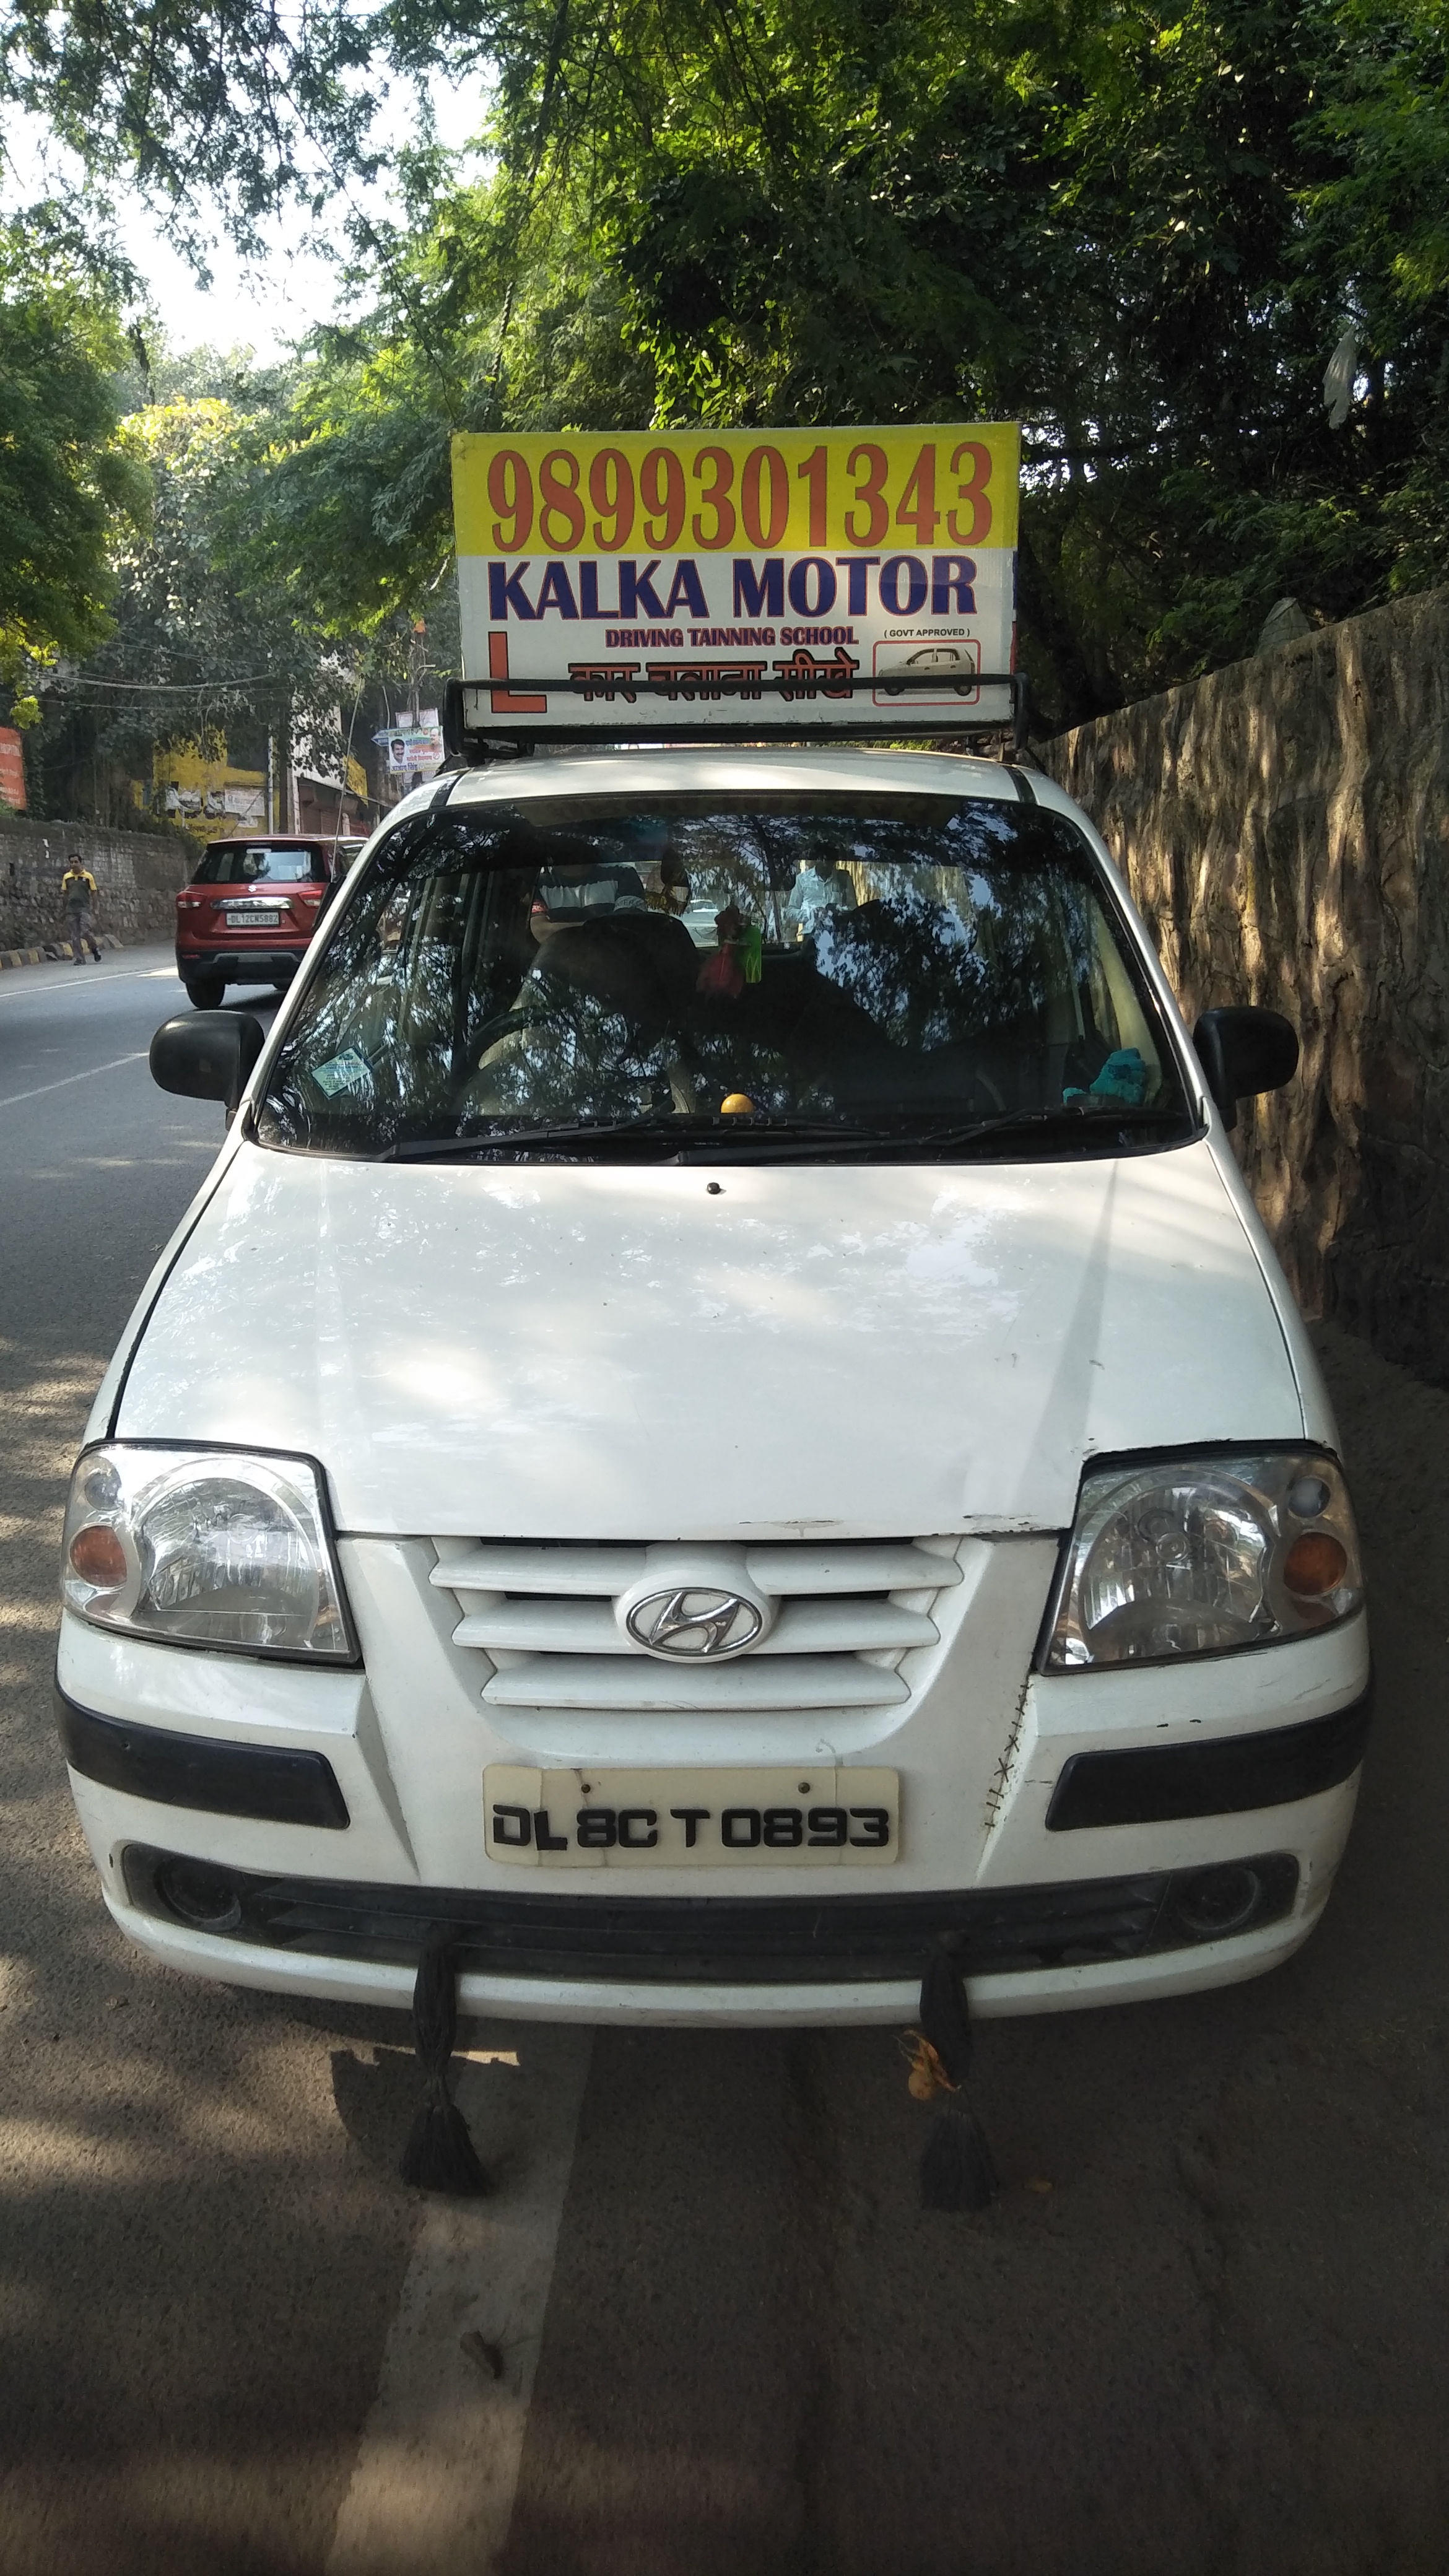 Kalka Driving School